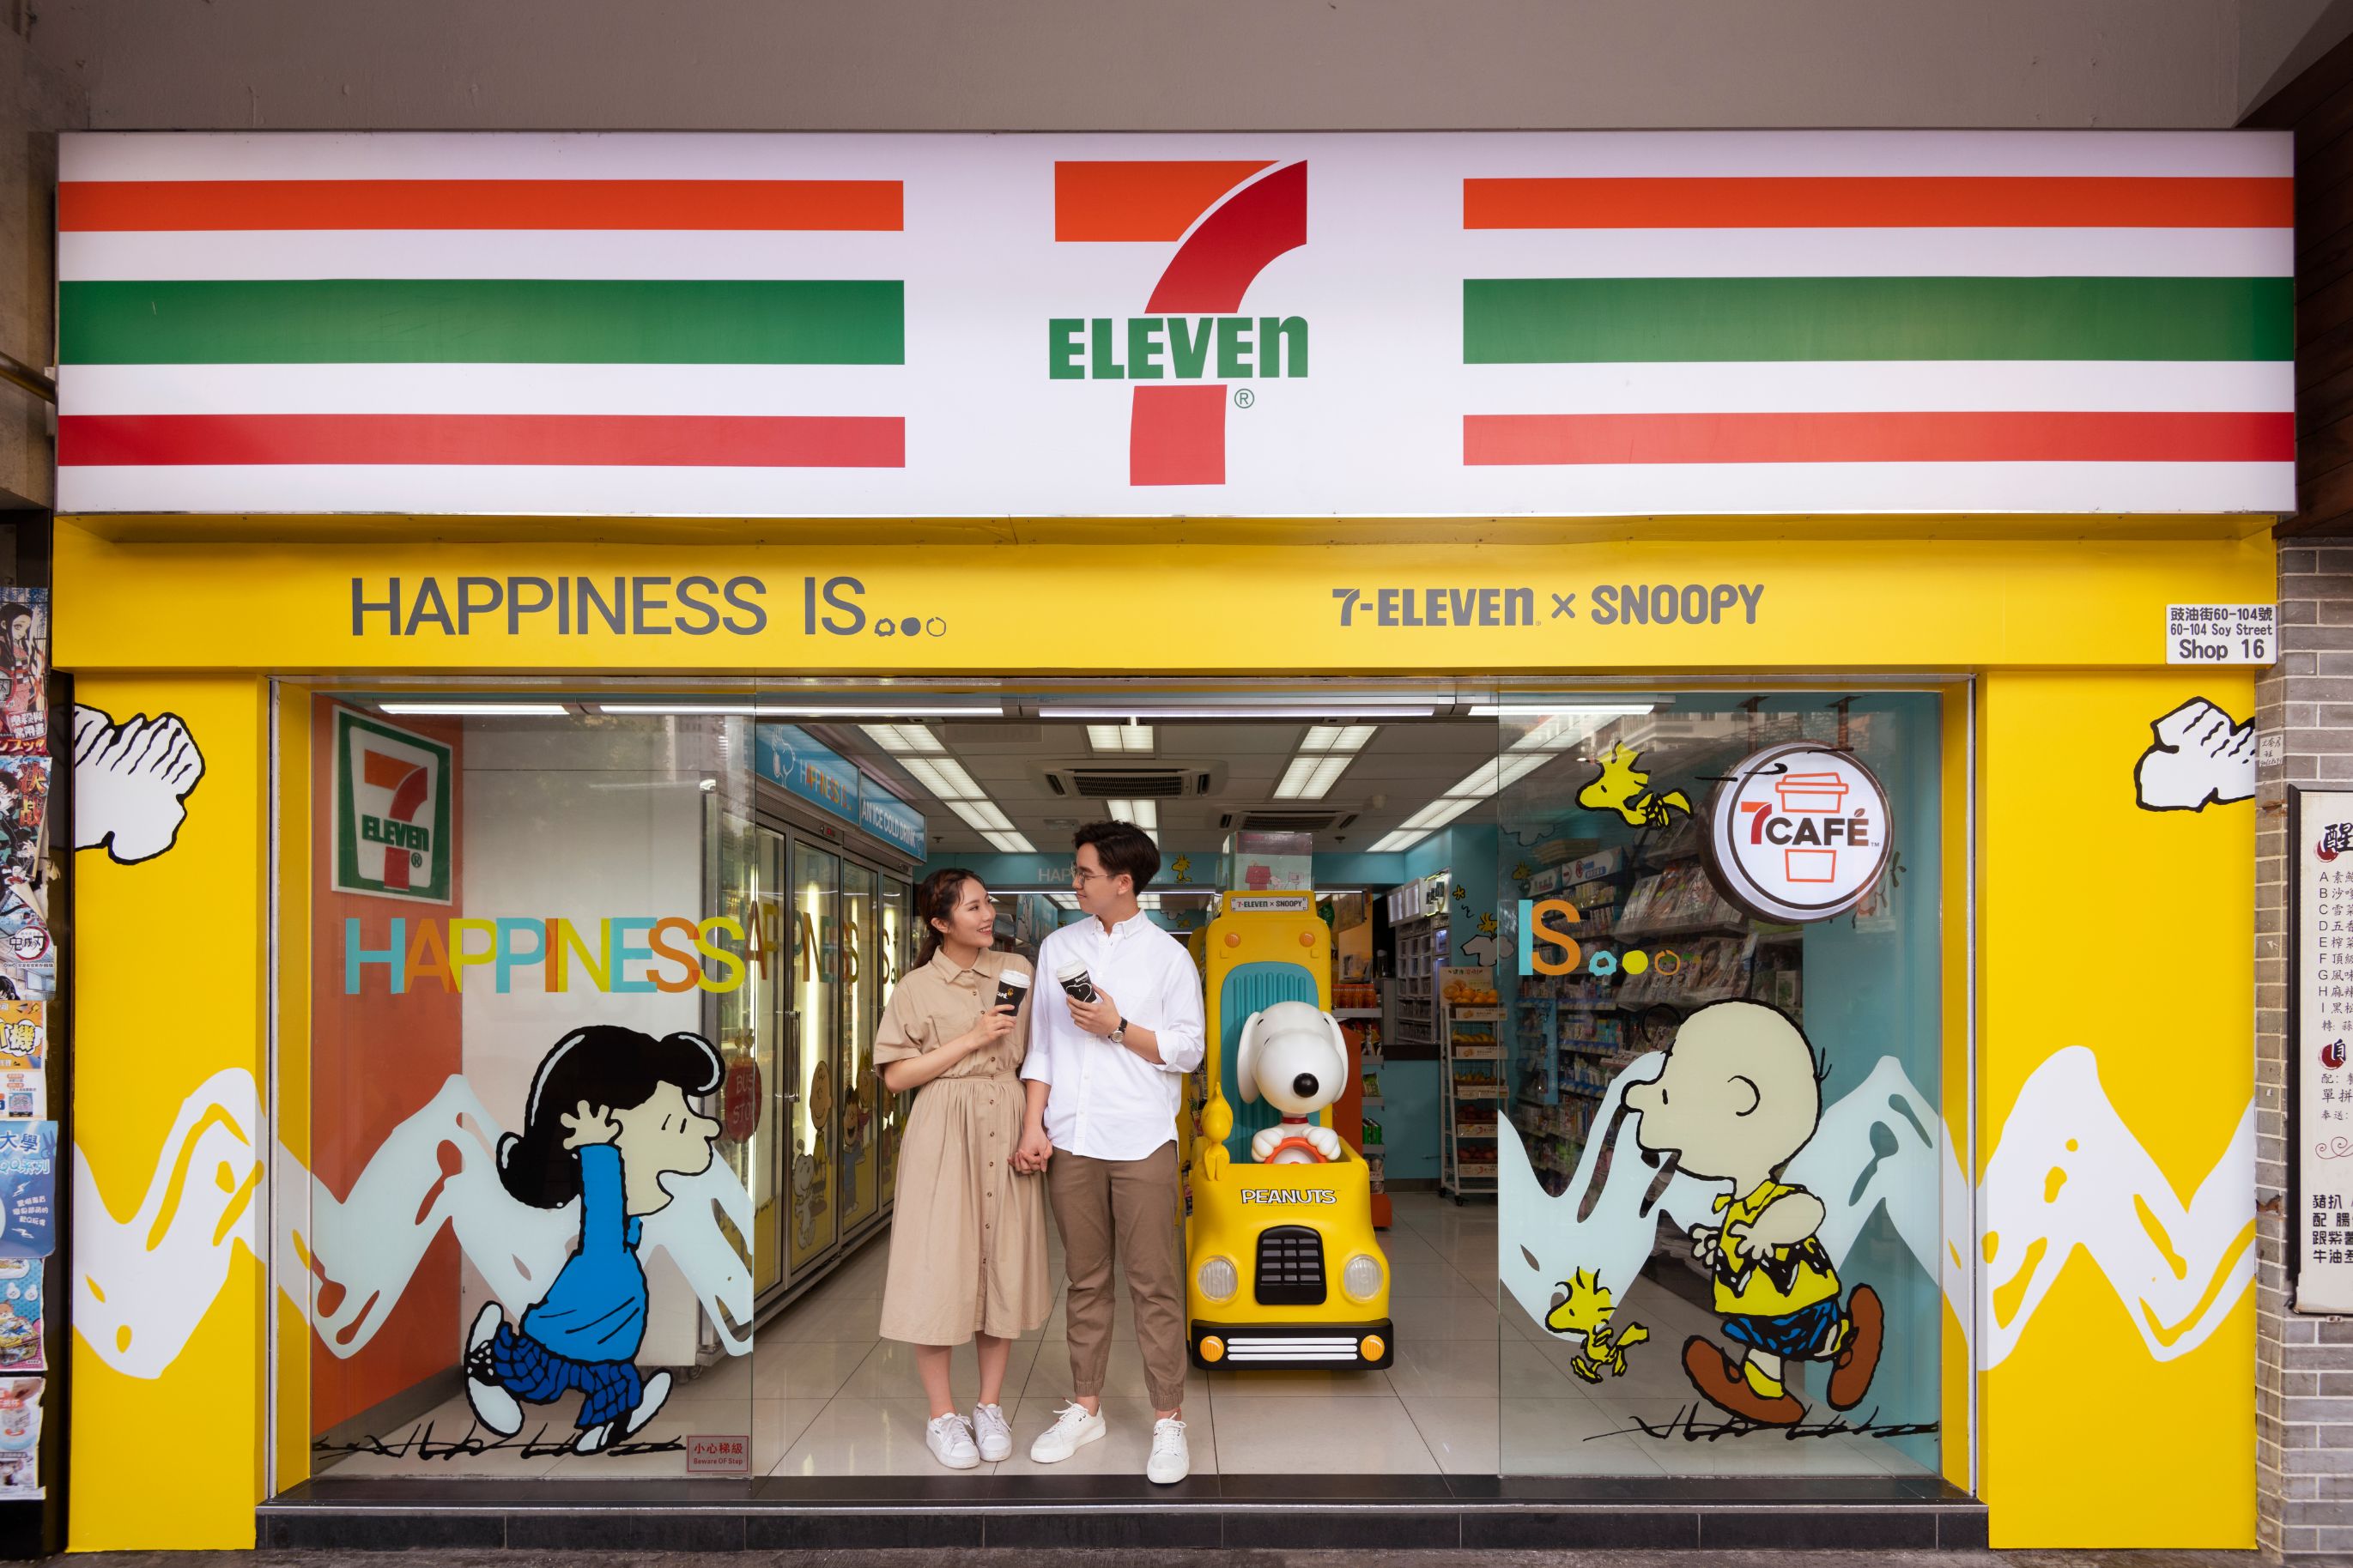 7-Eleven x Snoopy 專屬概念店開幕